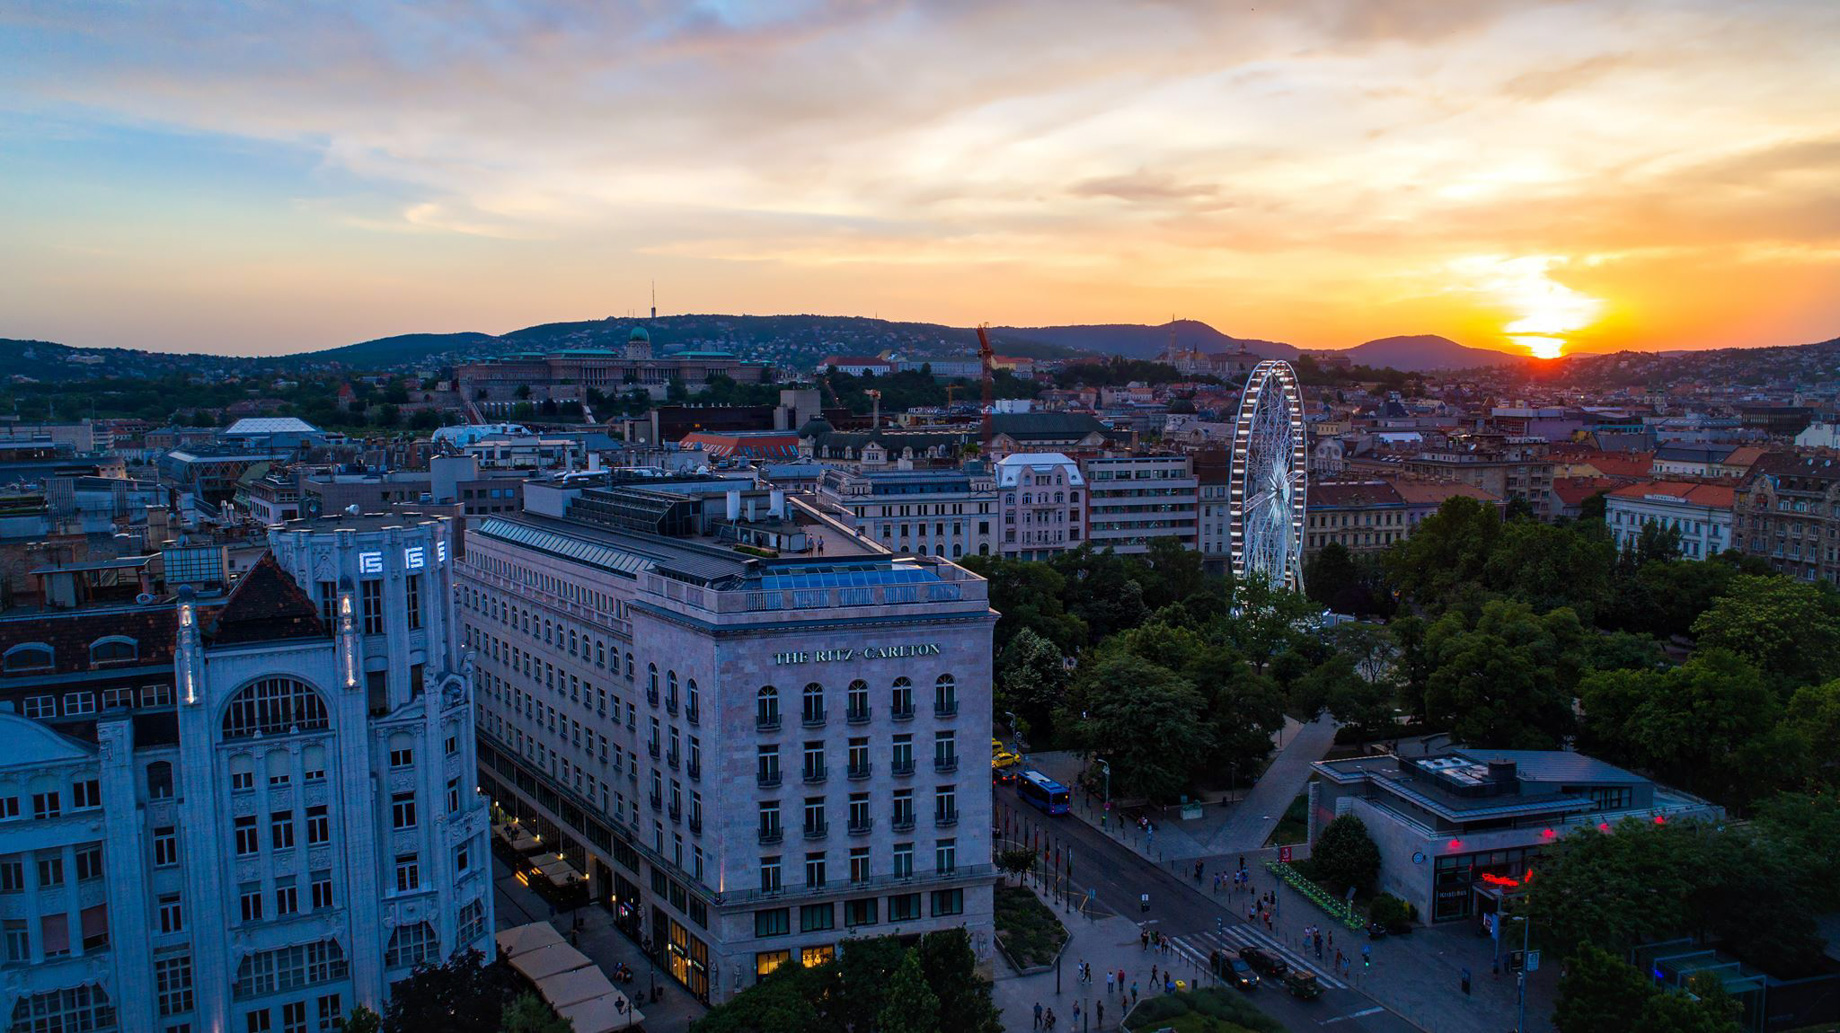 The Ritz-Carlton, Budapest Hotel - Budapest, Hungary - Hotel Aerial View Sunset